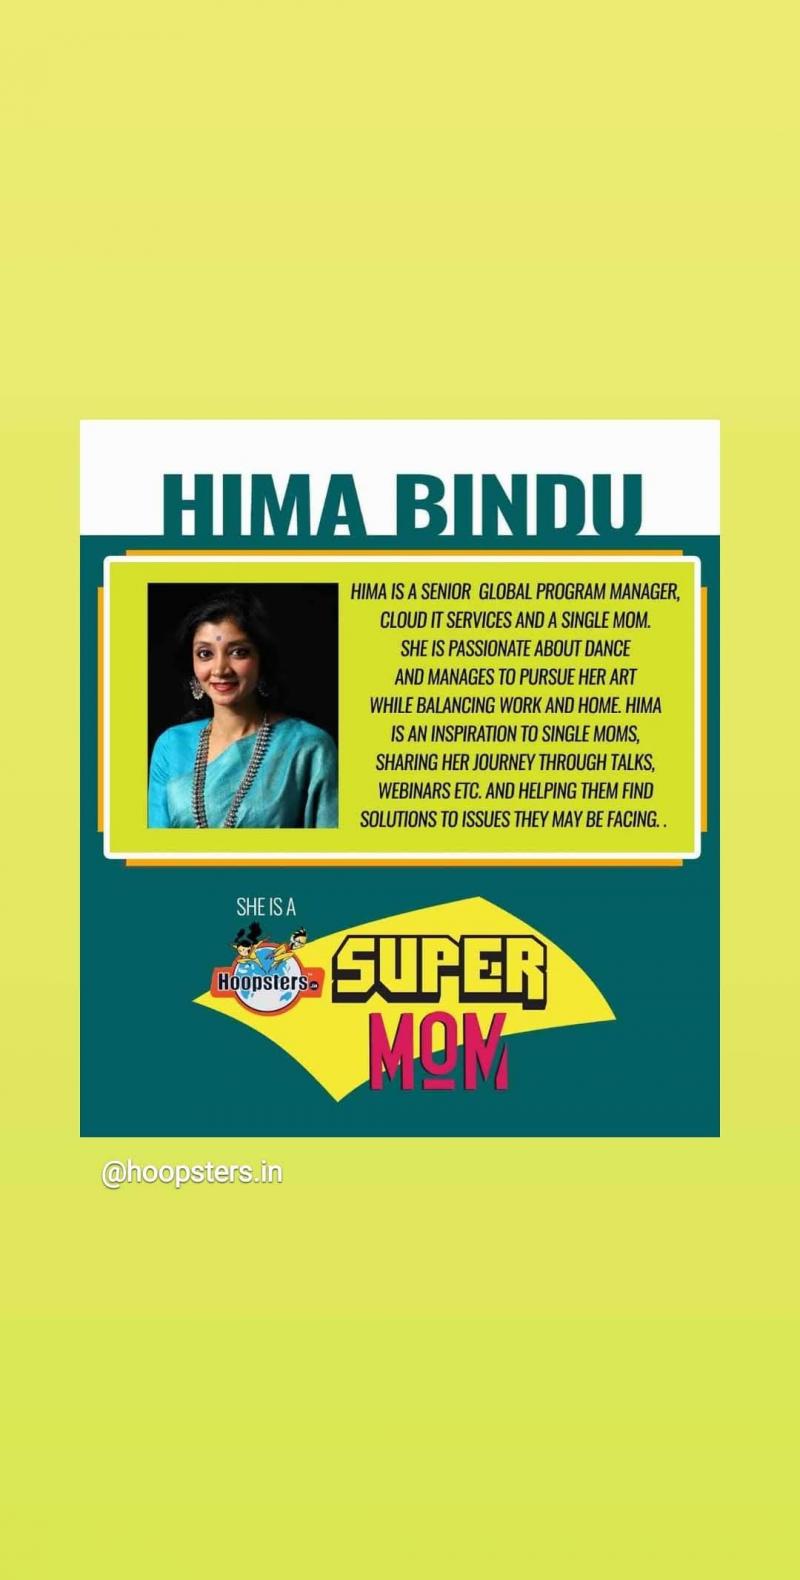 HIma Bindu